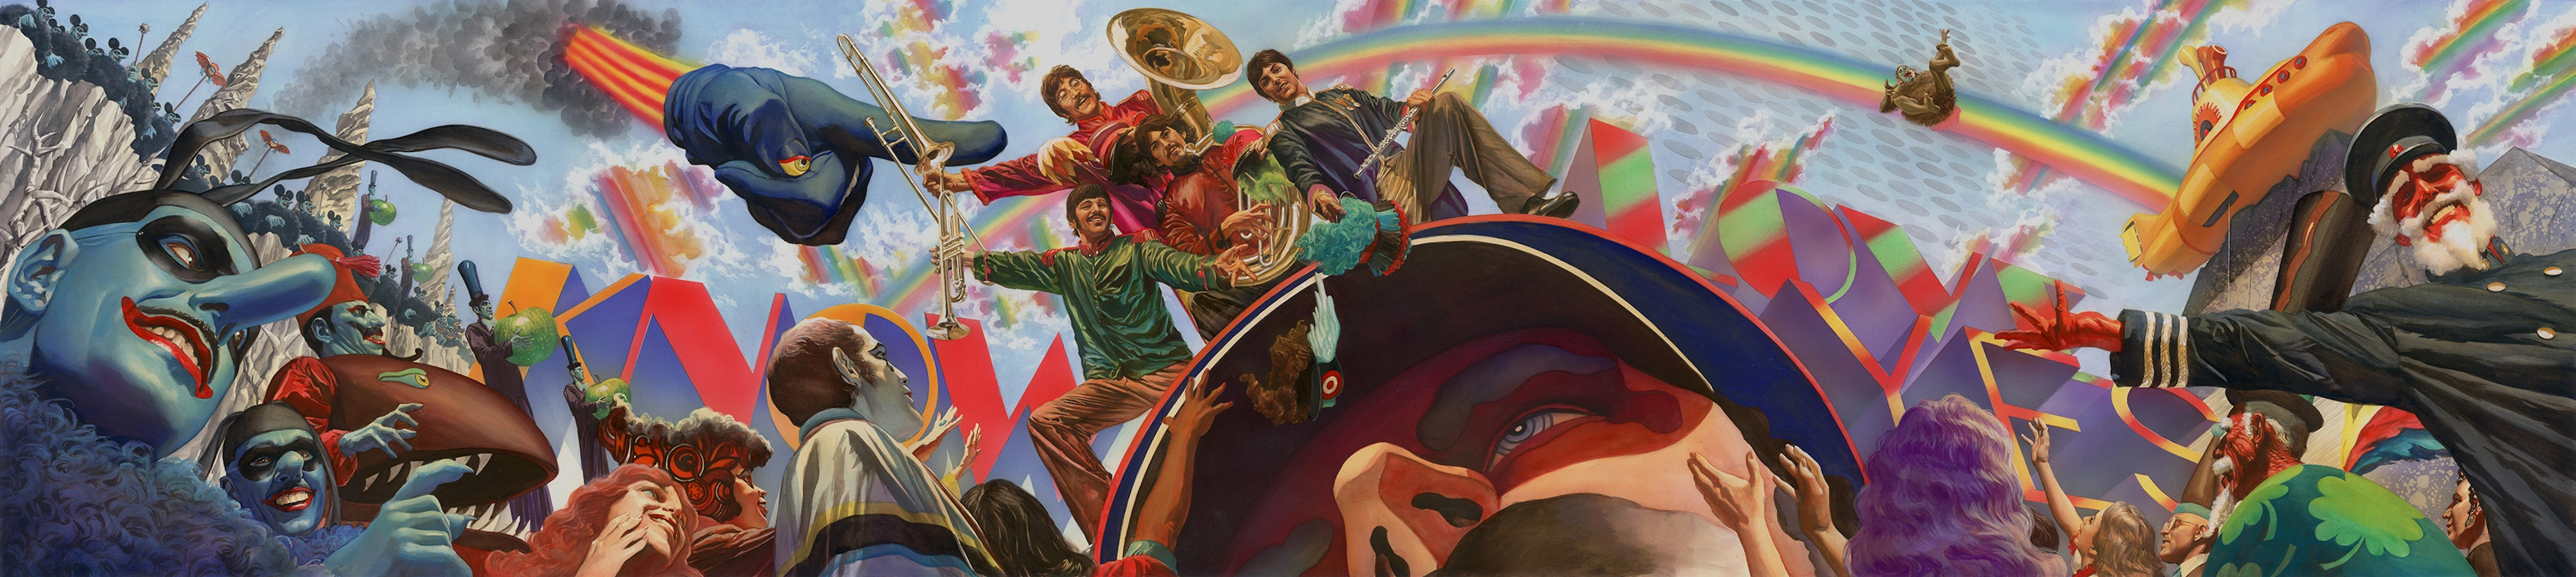 The Beatles George Harrison Paul McCartney Ringo Starr John Lennon Pop Art Band Submarine Rainbows T 4020x900